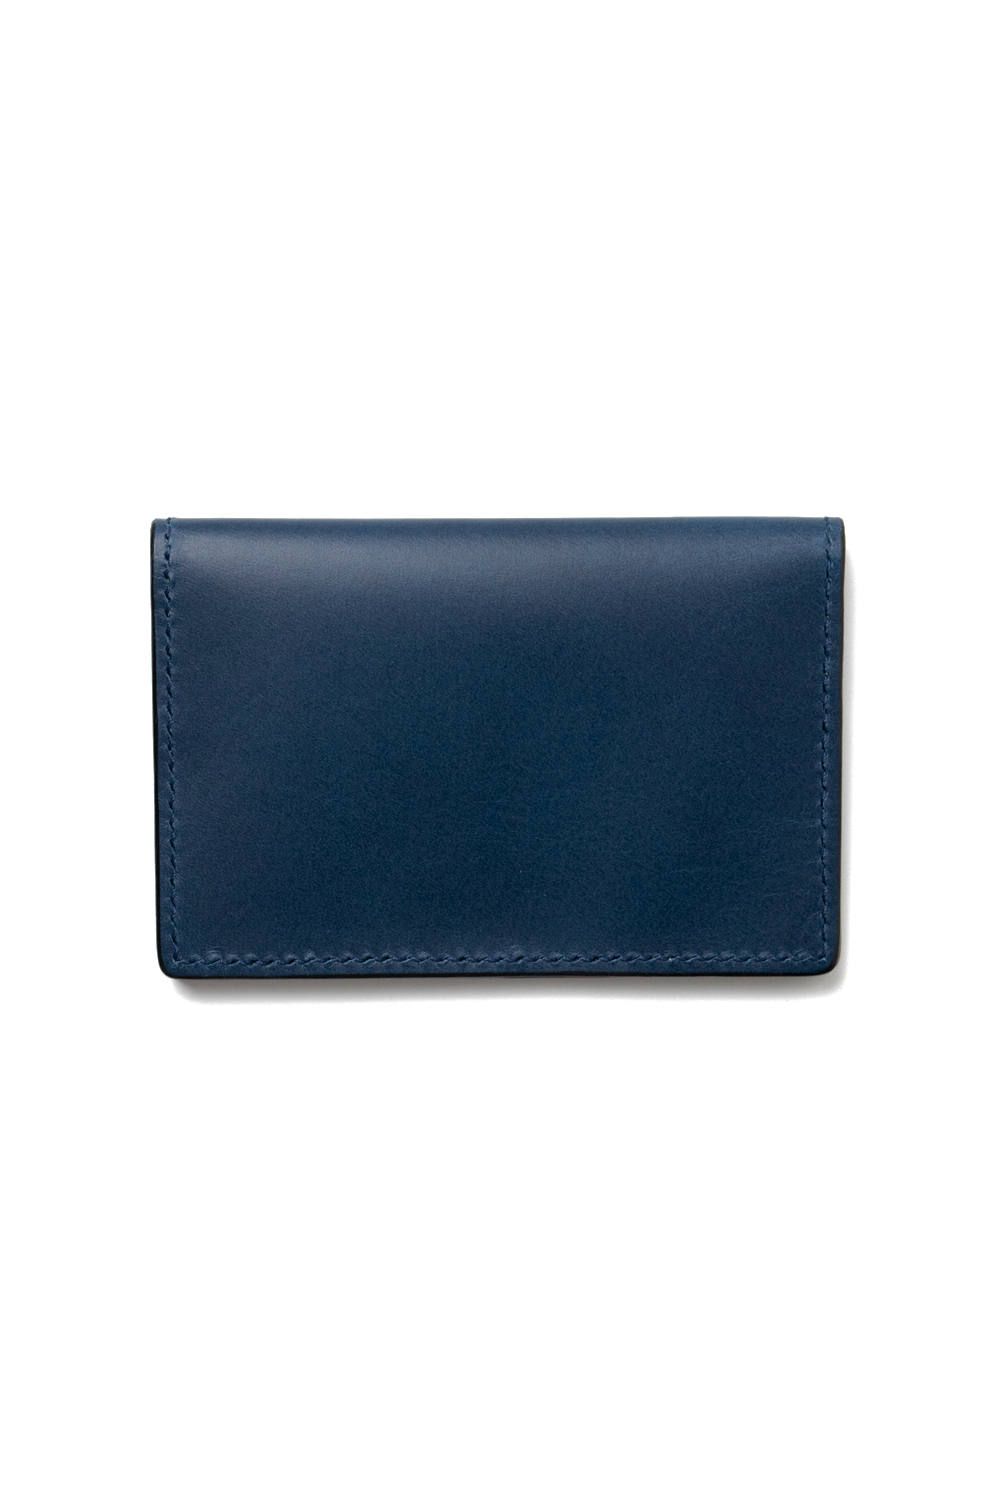 NIBUR - STARRY - Card case [BLUE] / スターリー - 七宝カードケース